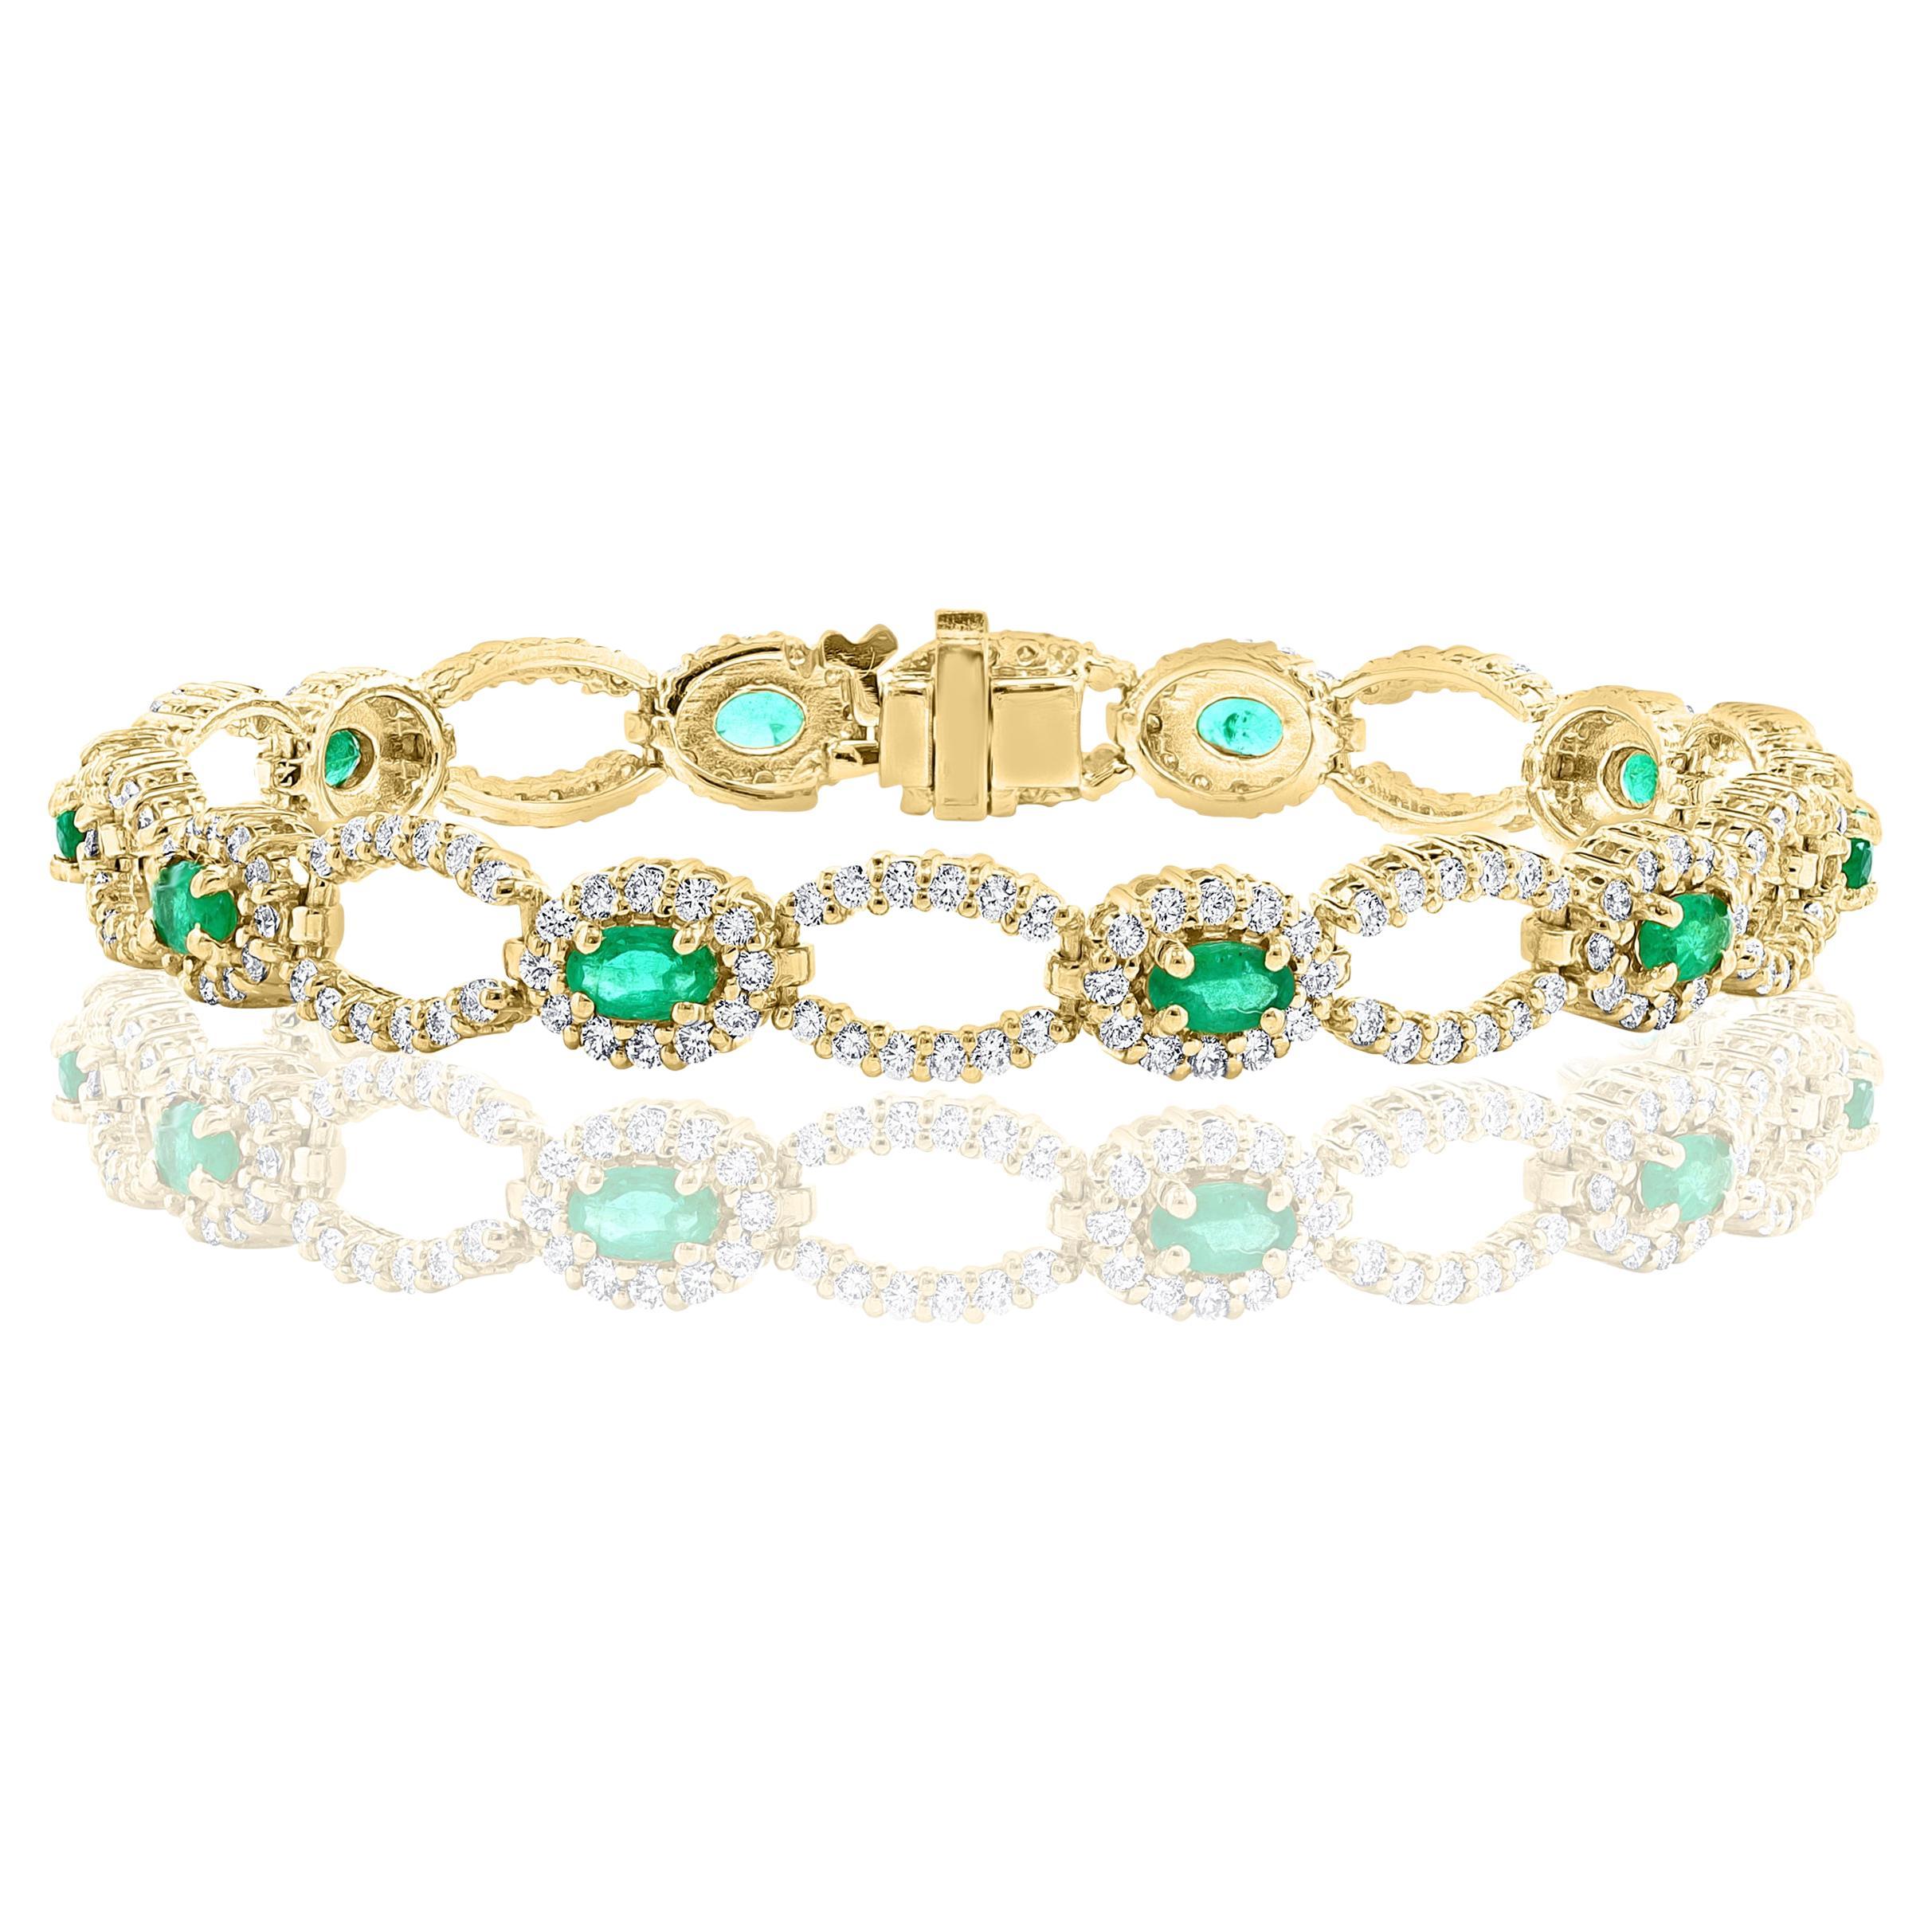 Open-Work 2.13 Carat Emerald and Diamond Bracelet in 14K Yellow Gold